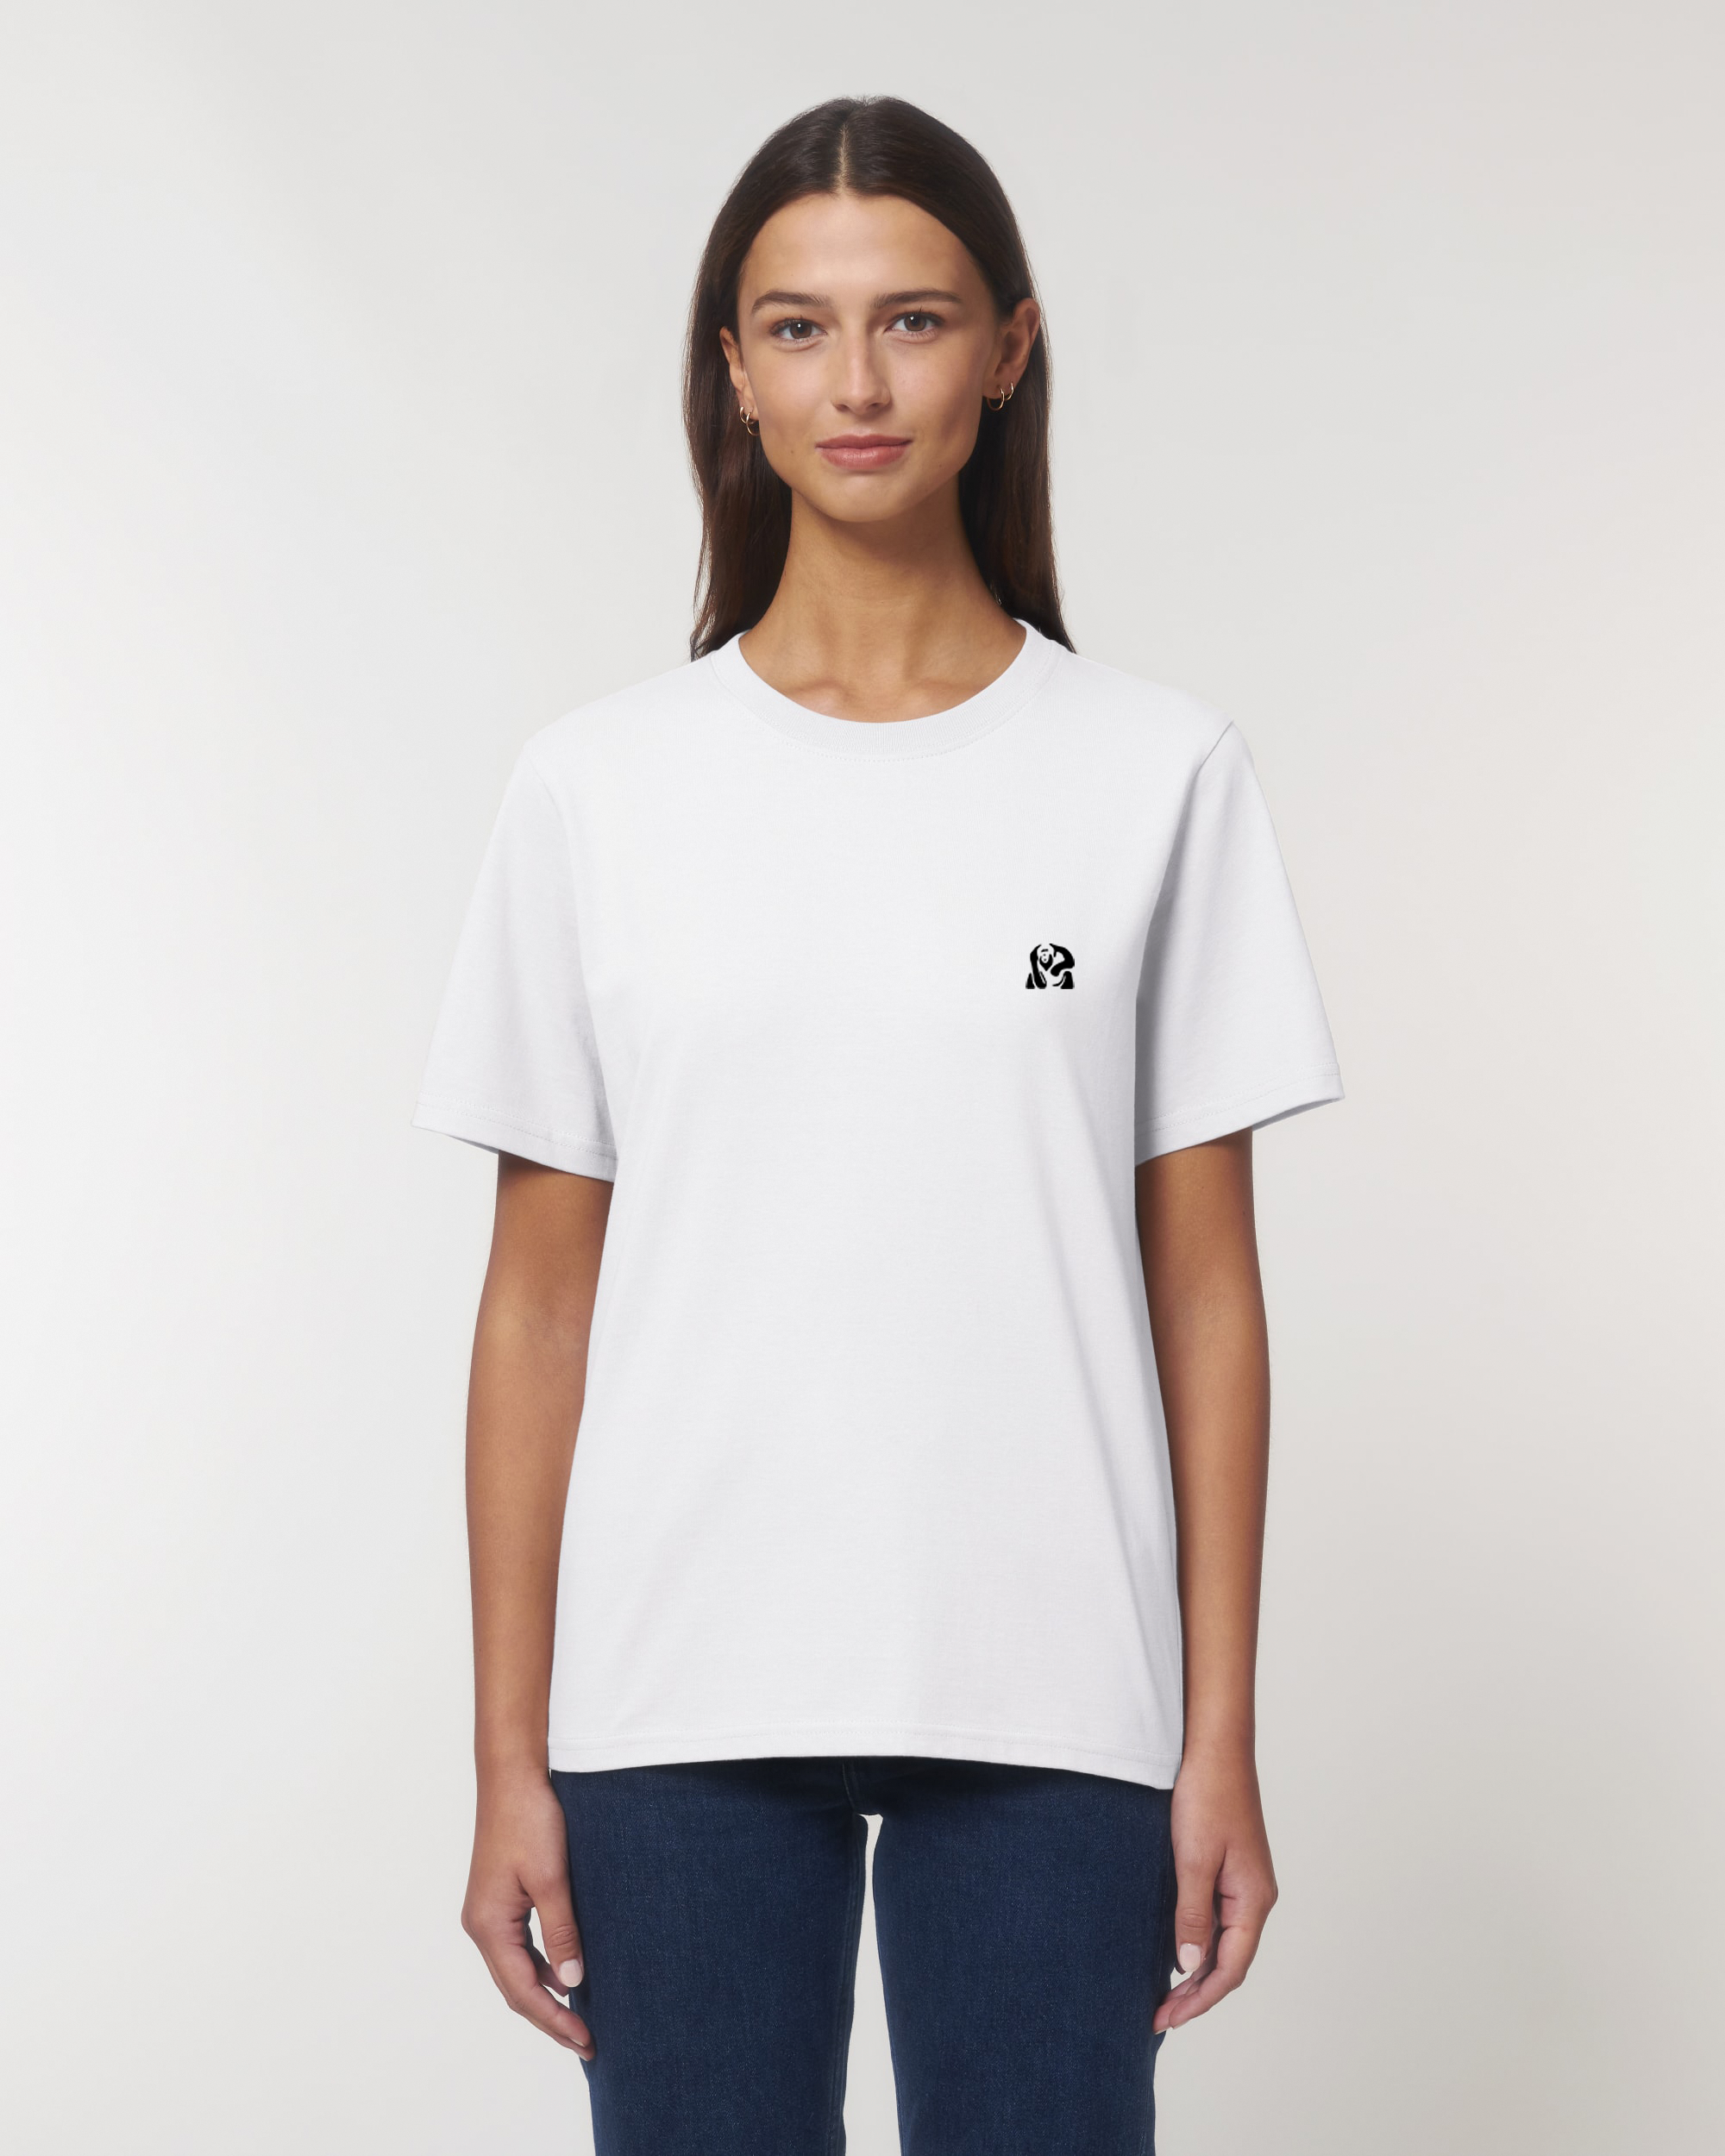 Dickes Unisex-T-Shirt aus Bio-Baumwolle – Kilimanjaro